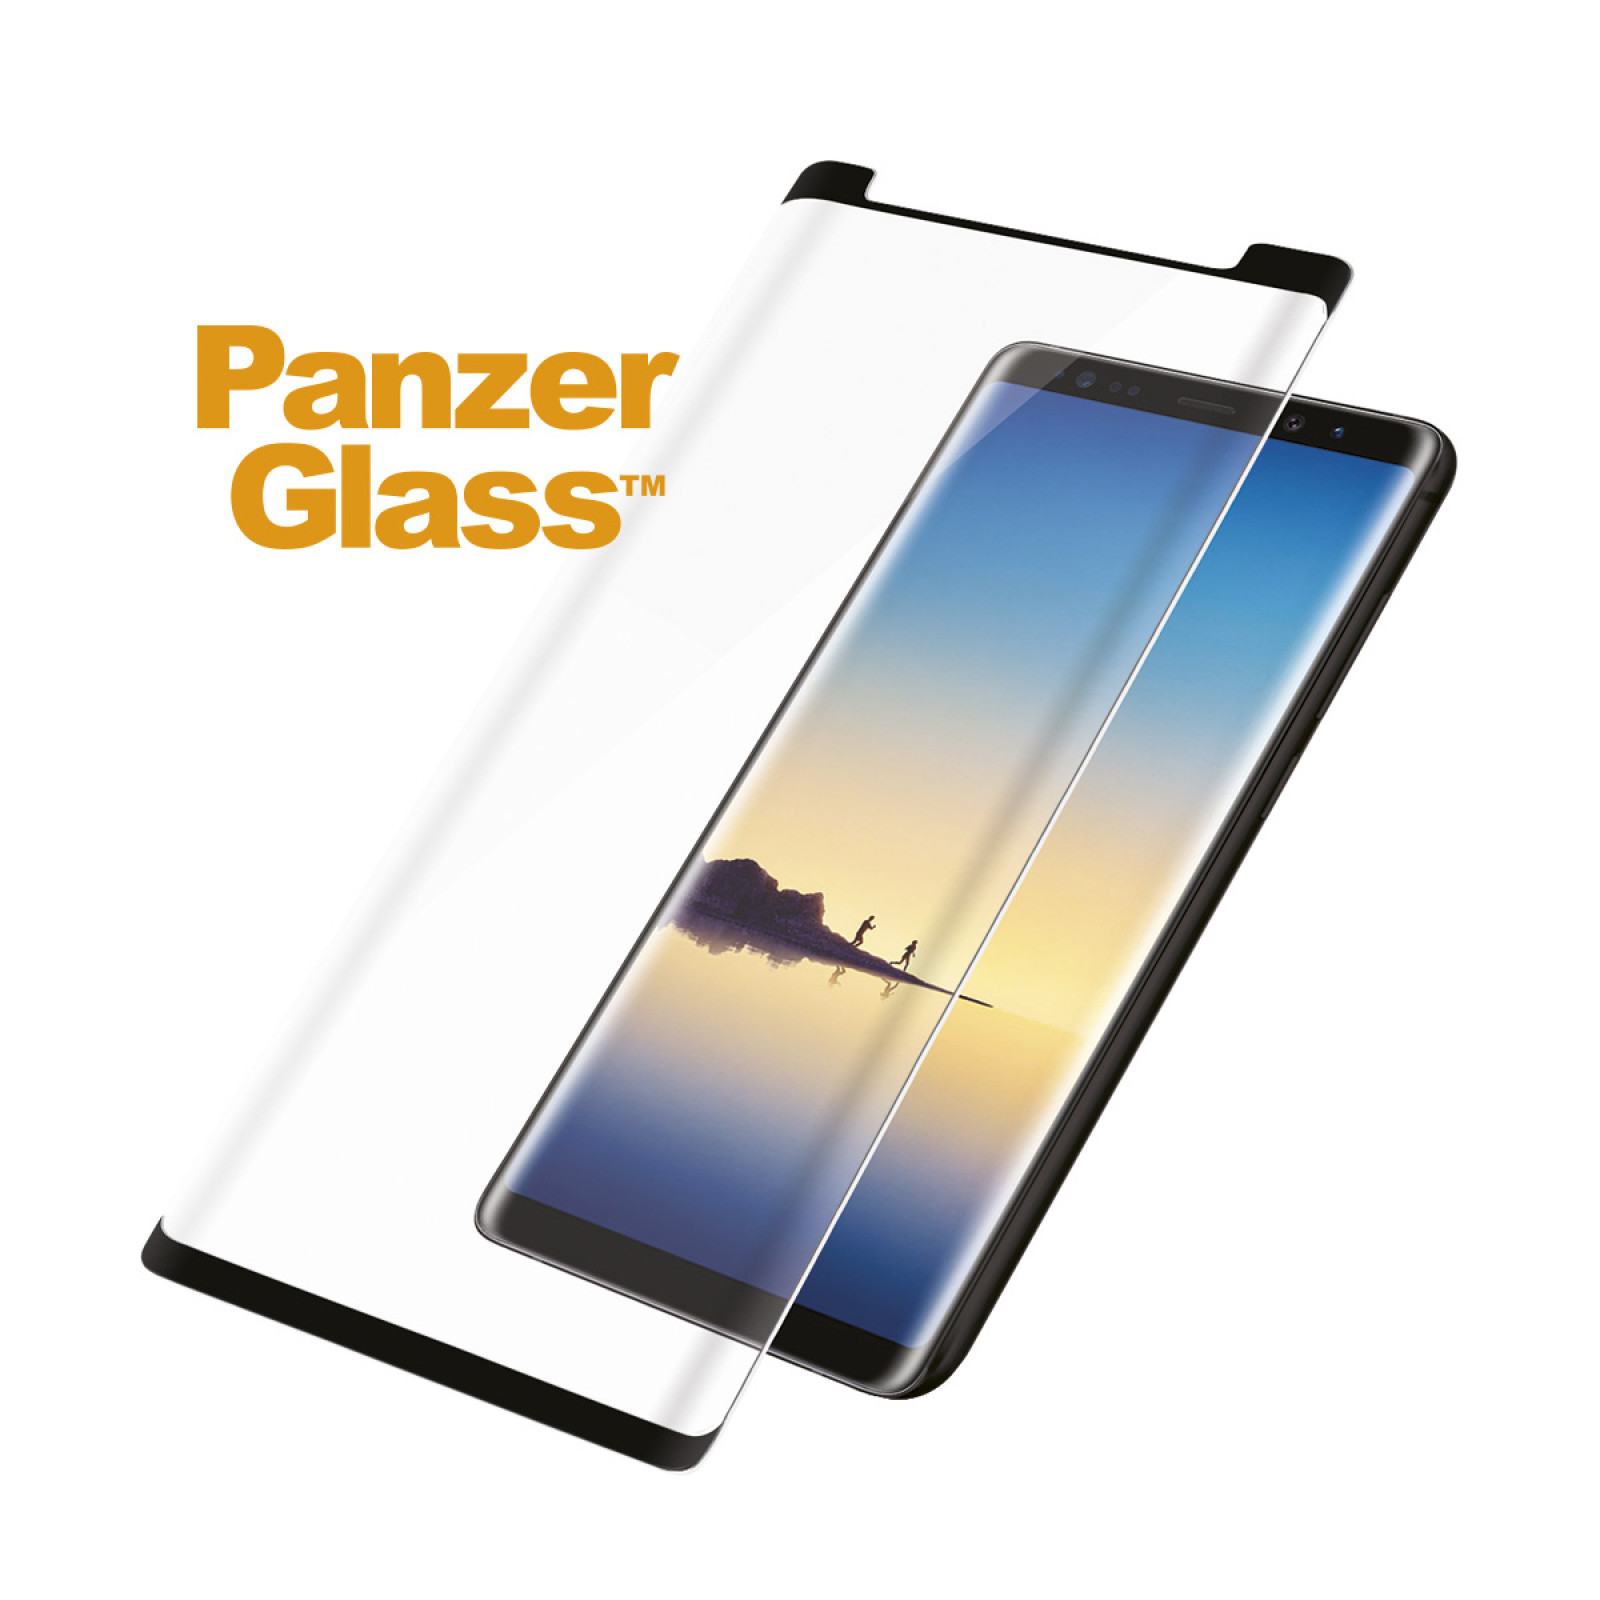 Стъклен протектор PanzerGlass за Samsung Galaxy Note 9 Case Friendly Черен